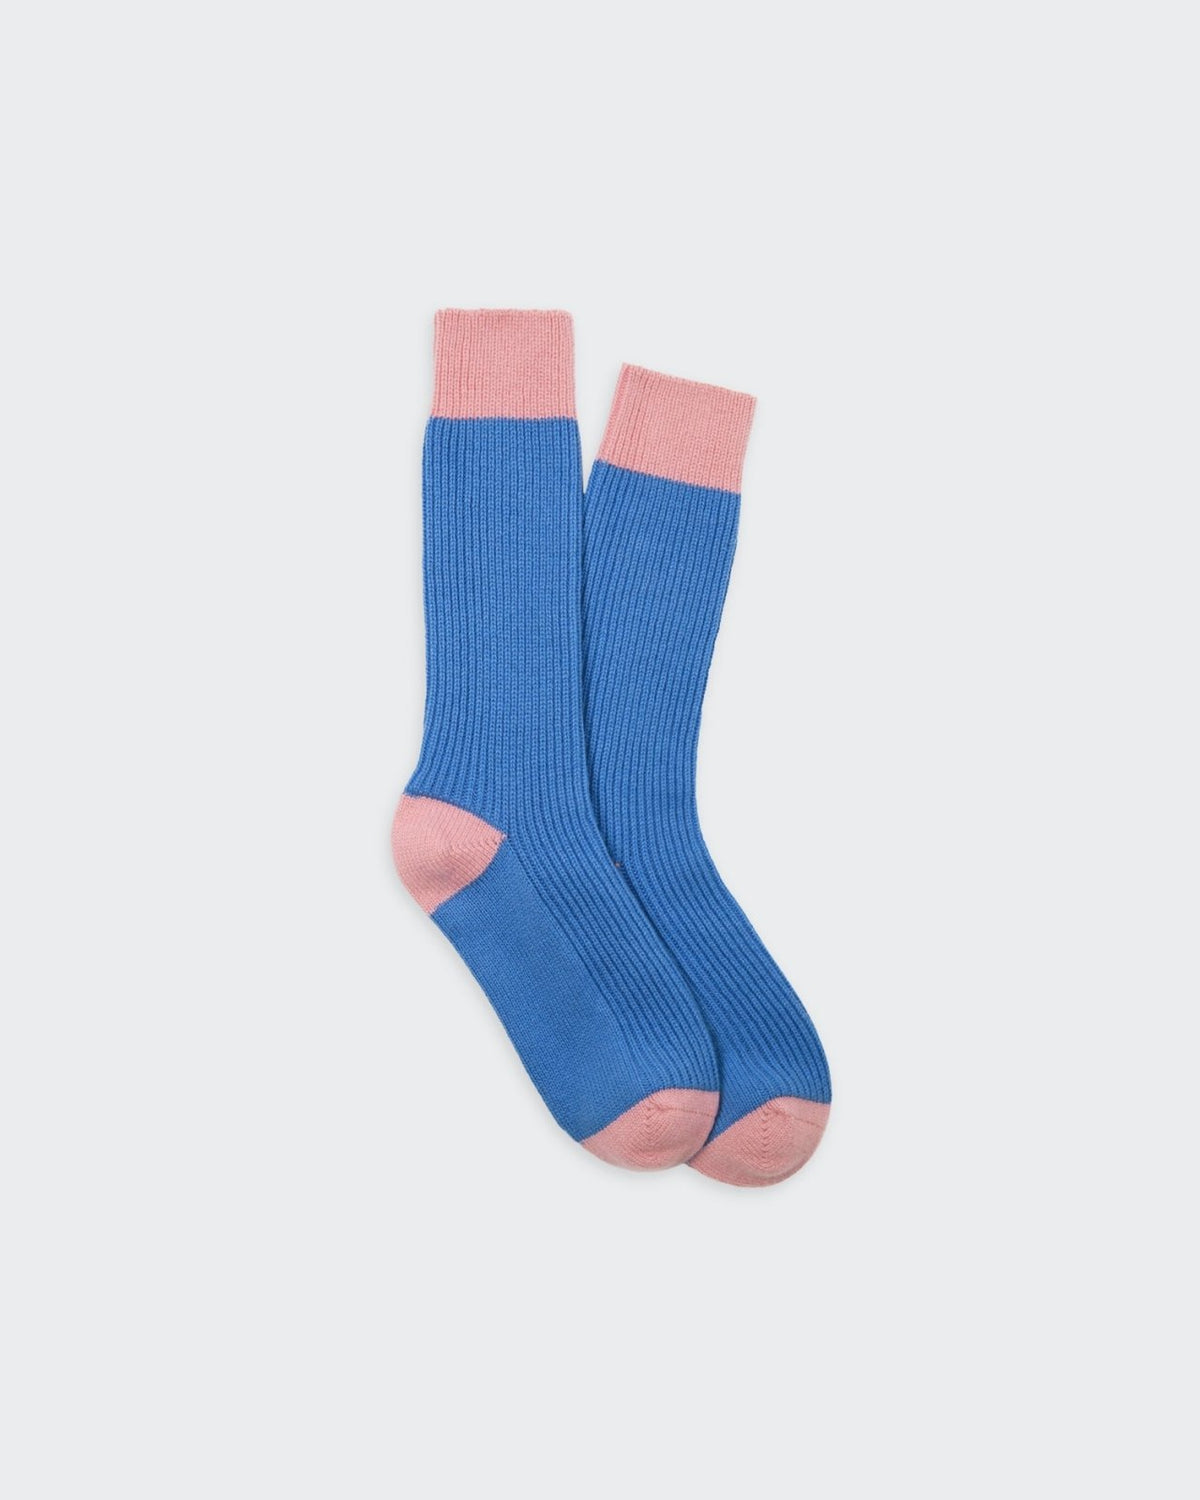 The Soft Socks - Dawn Blue/Blush